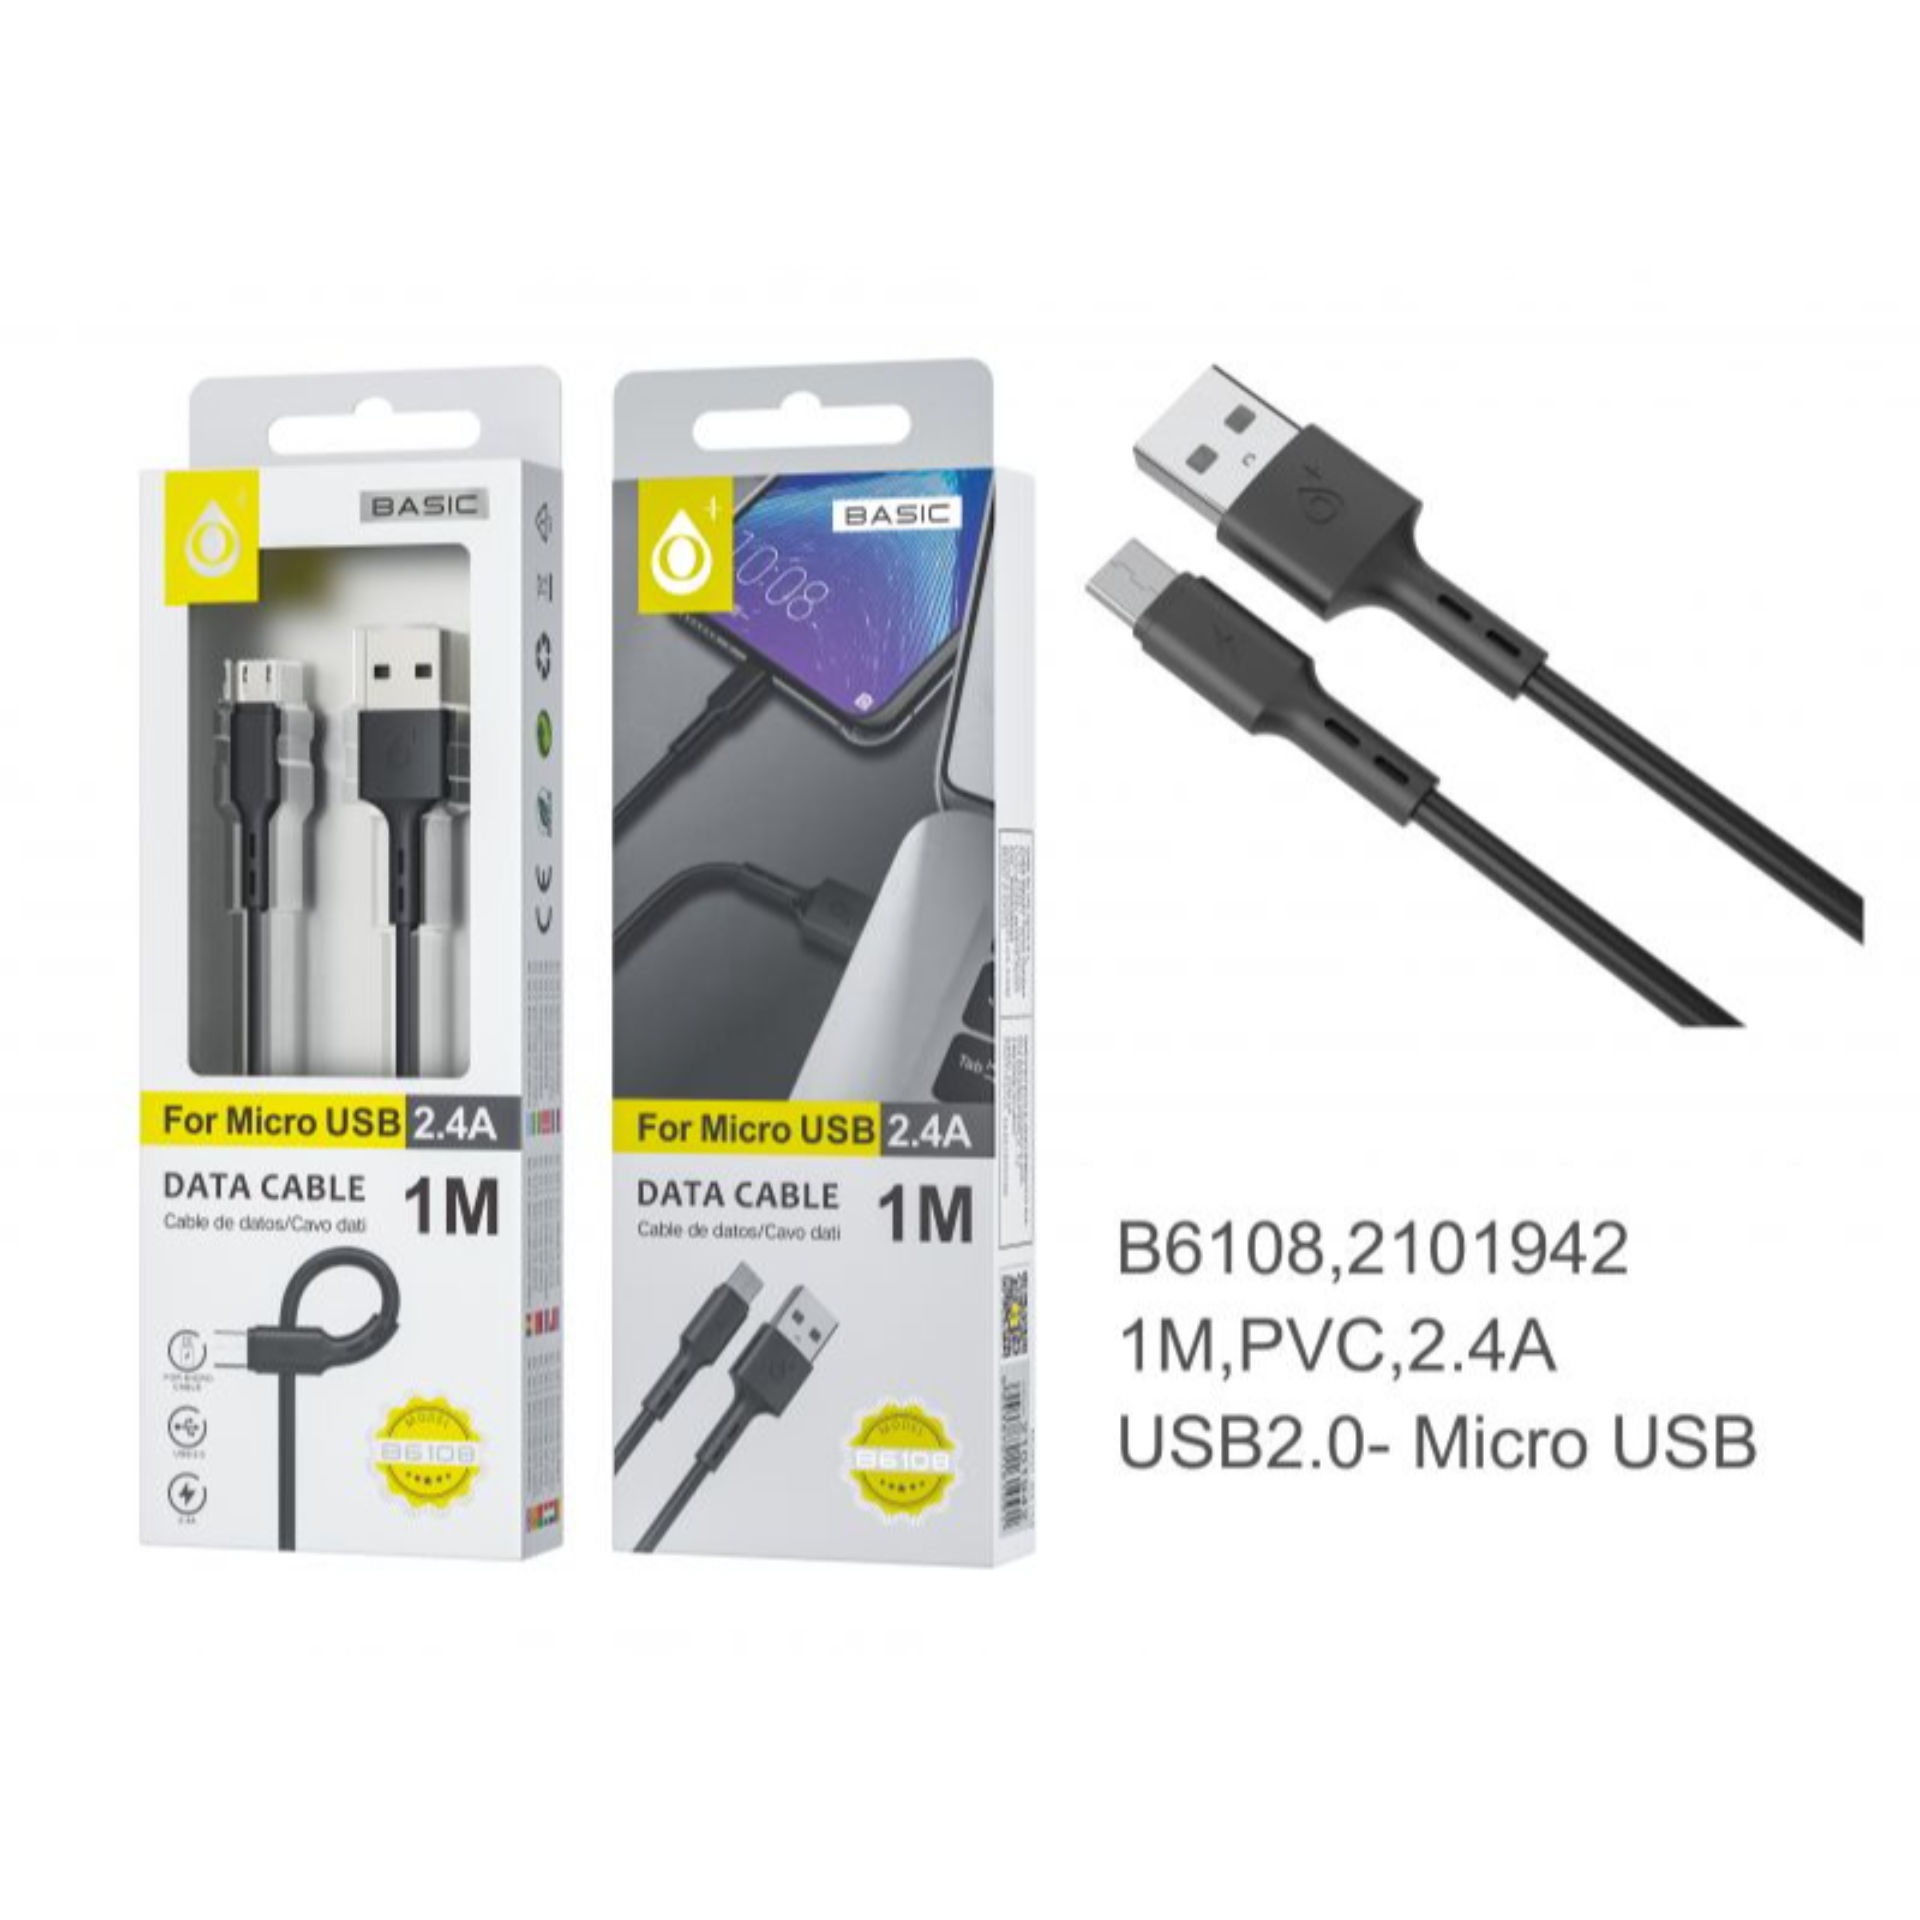 B6108 NE, CAVO DATI FLAUTO S.BASIC PER MICRO USB,